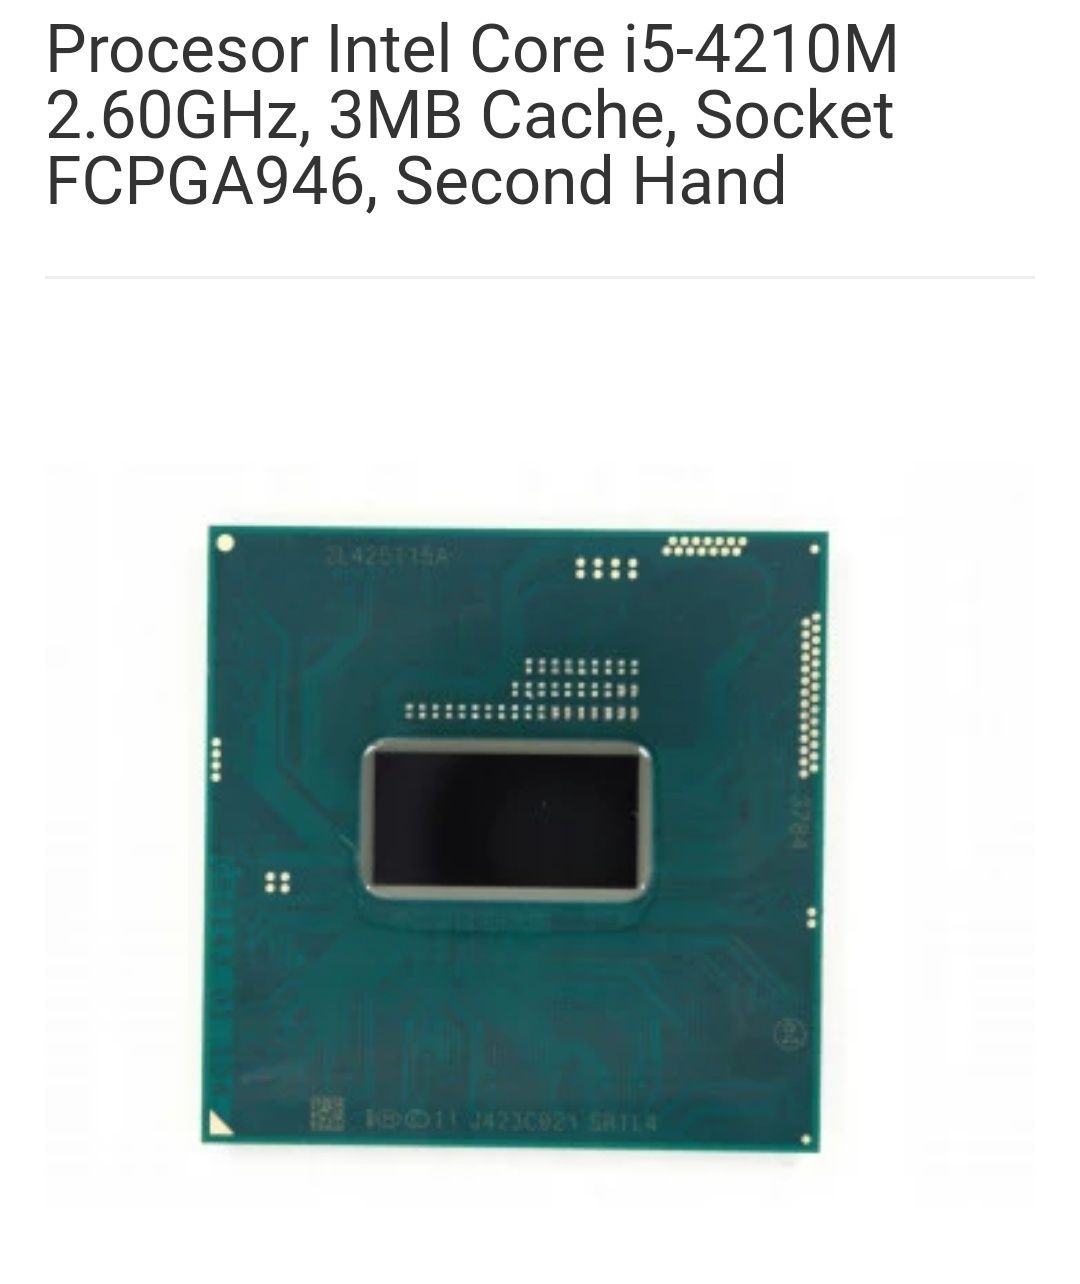 Procesor laptop i5 - procesor Intel® Core™ i5-4210M 2.60GHz,